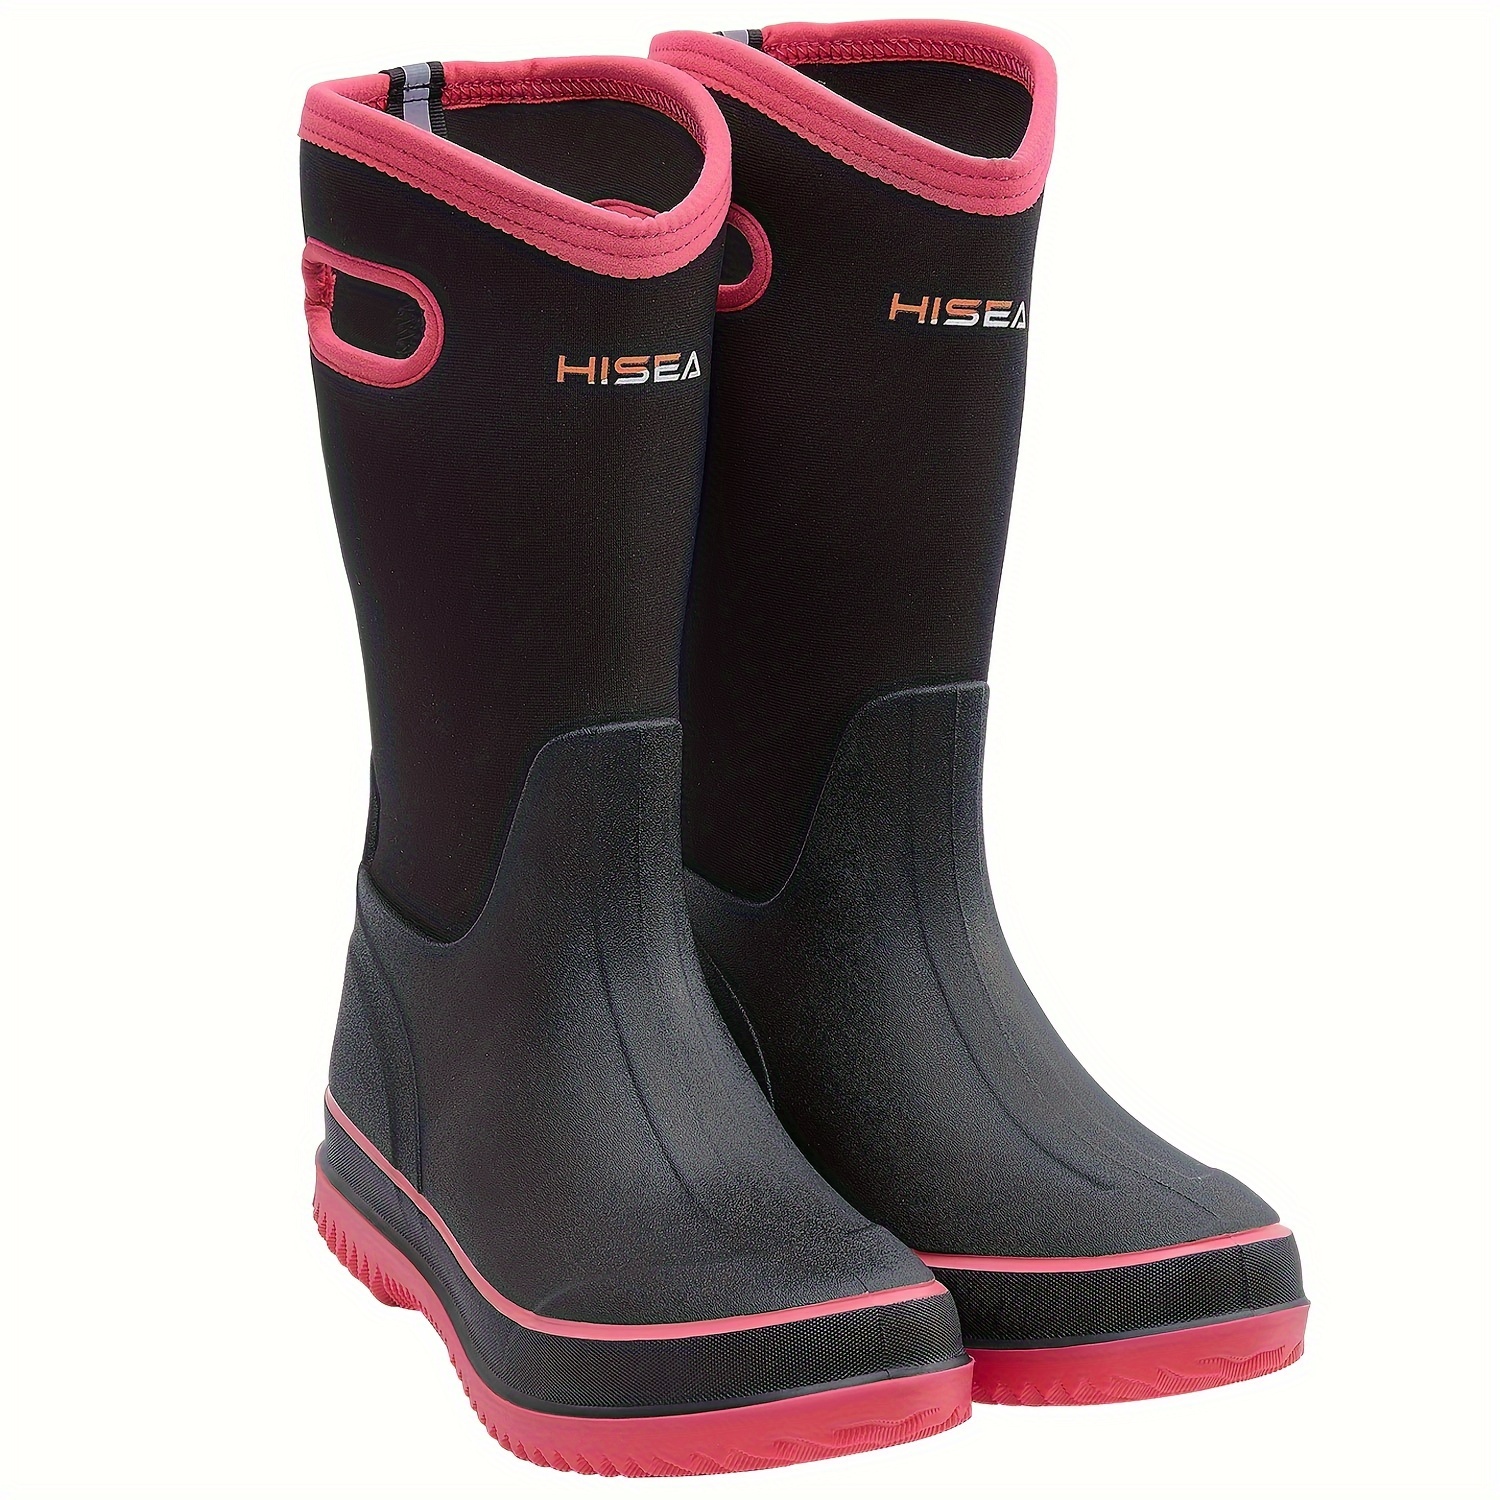 

Hisea Rain Boots For Women Mid Calf Rubber Boots Waterproof Neoprene Insulated Barn Boots For Mud Working Gardening